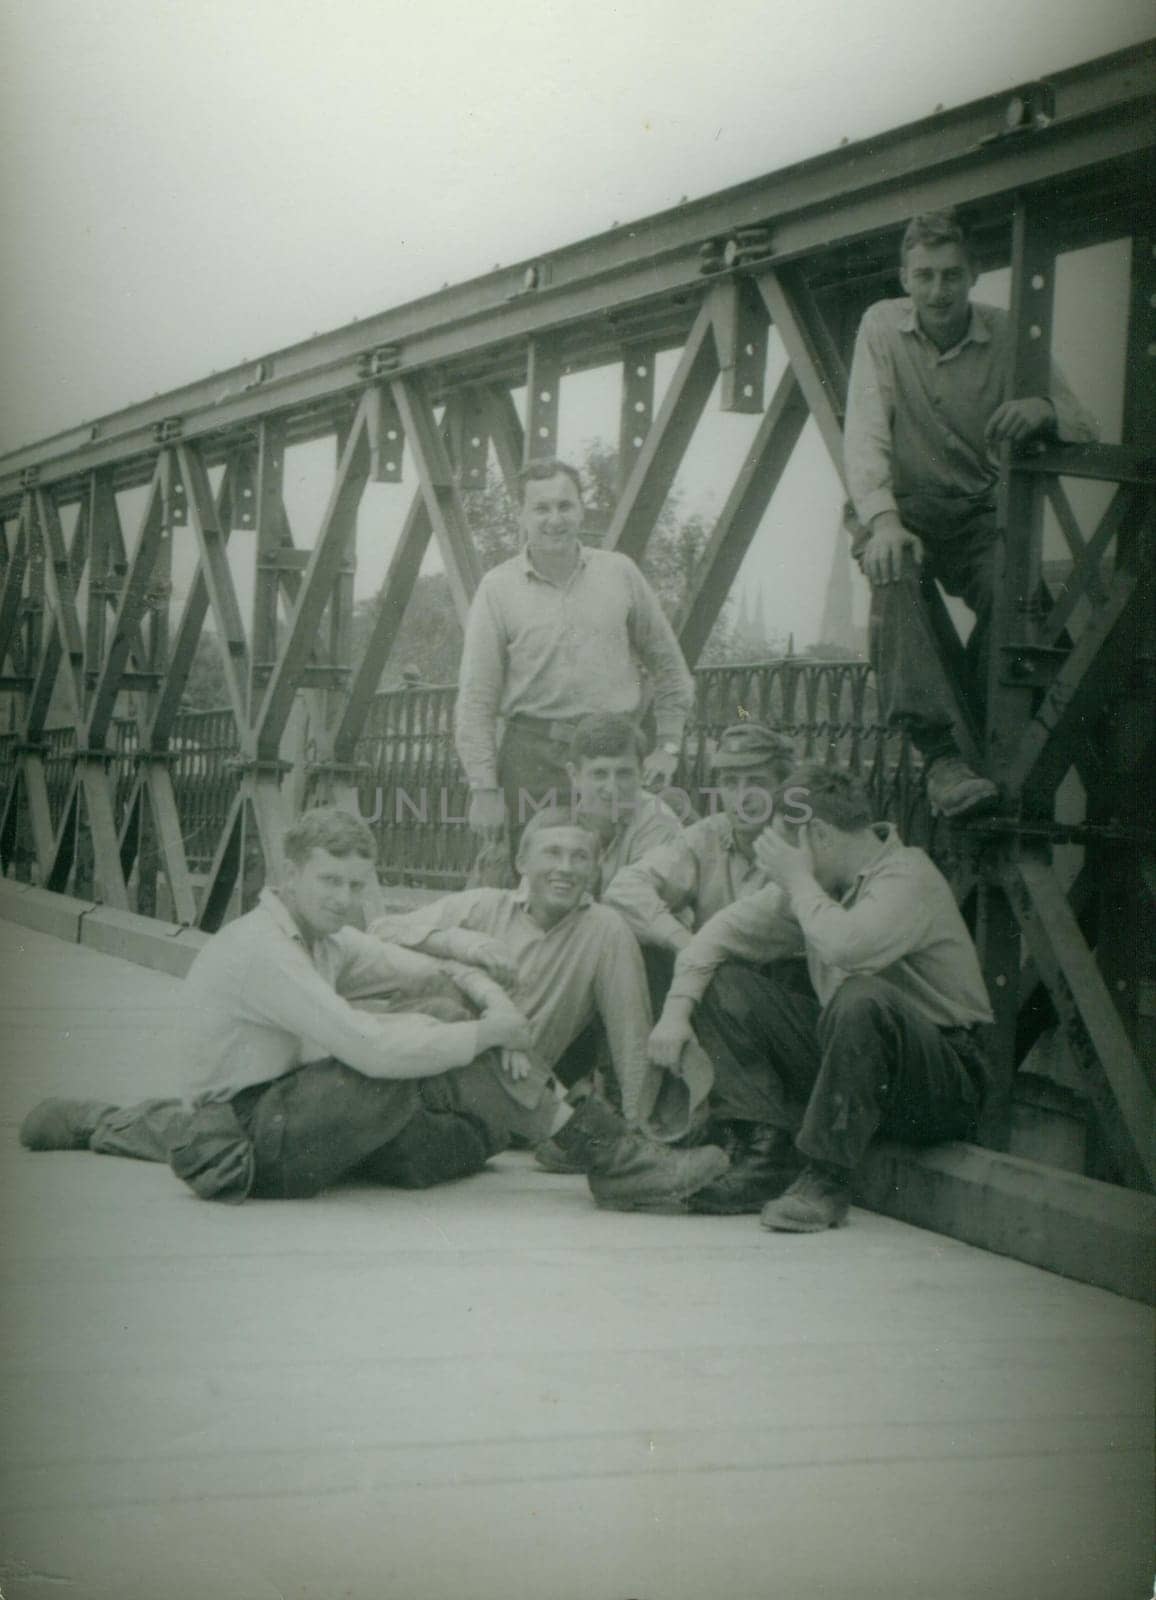 THE CZECHOSLOVAK SOCIALIST REPUBLIC - CIRCA 1970s: Retro photo shows combat engineers - sappers pose on the bridge construction. Vintage photography. Circa 1970.